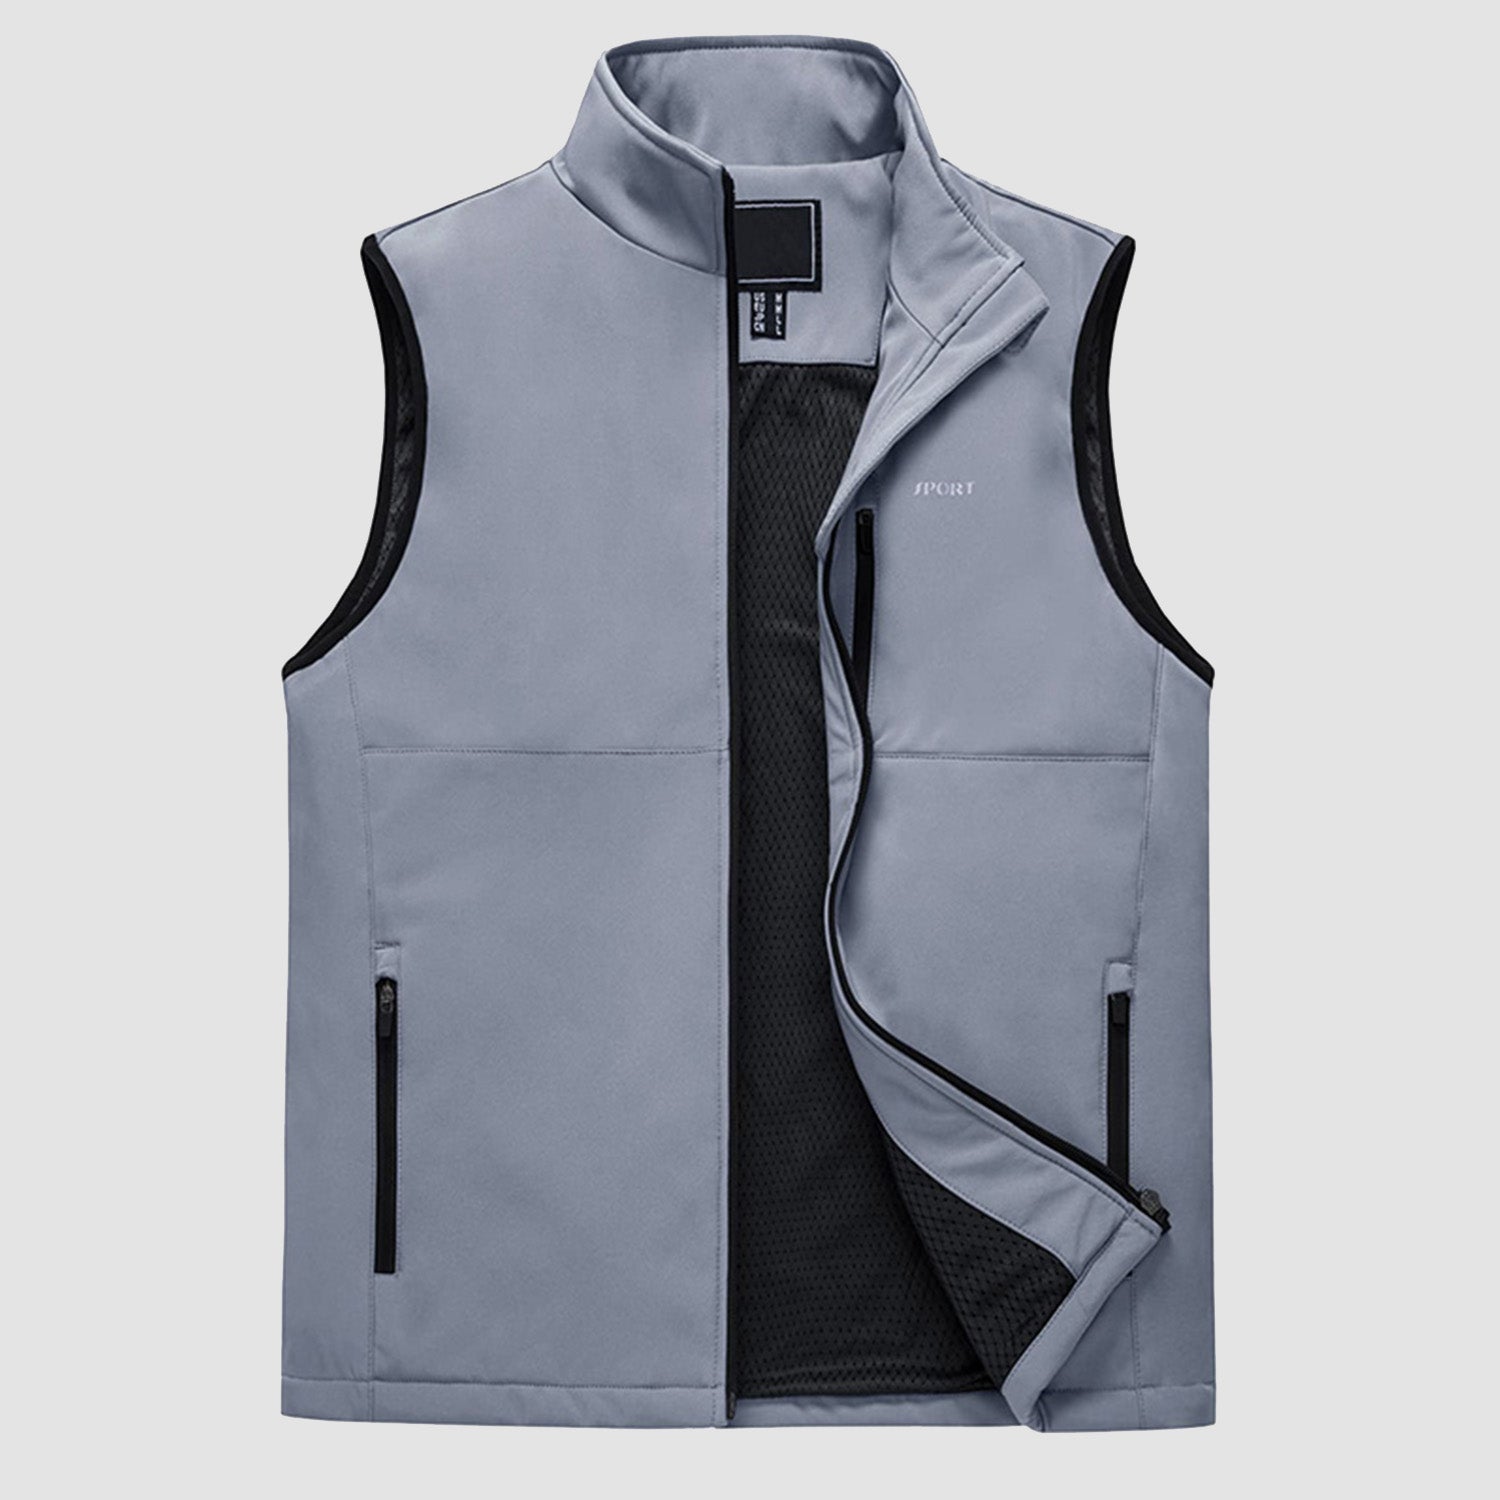 Summer Men's Lightweight Fishing Vest Casual Breathable Sleeveless